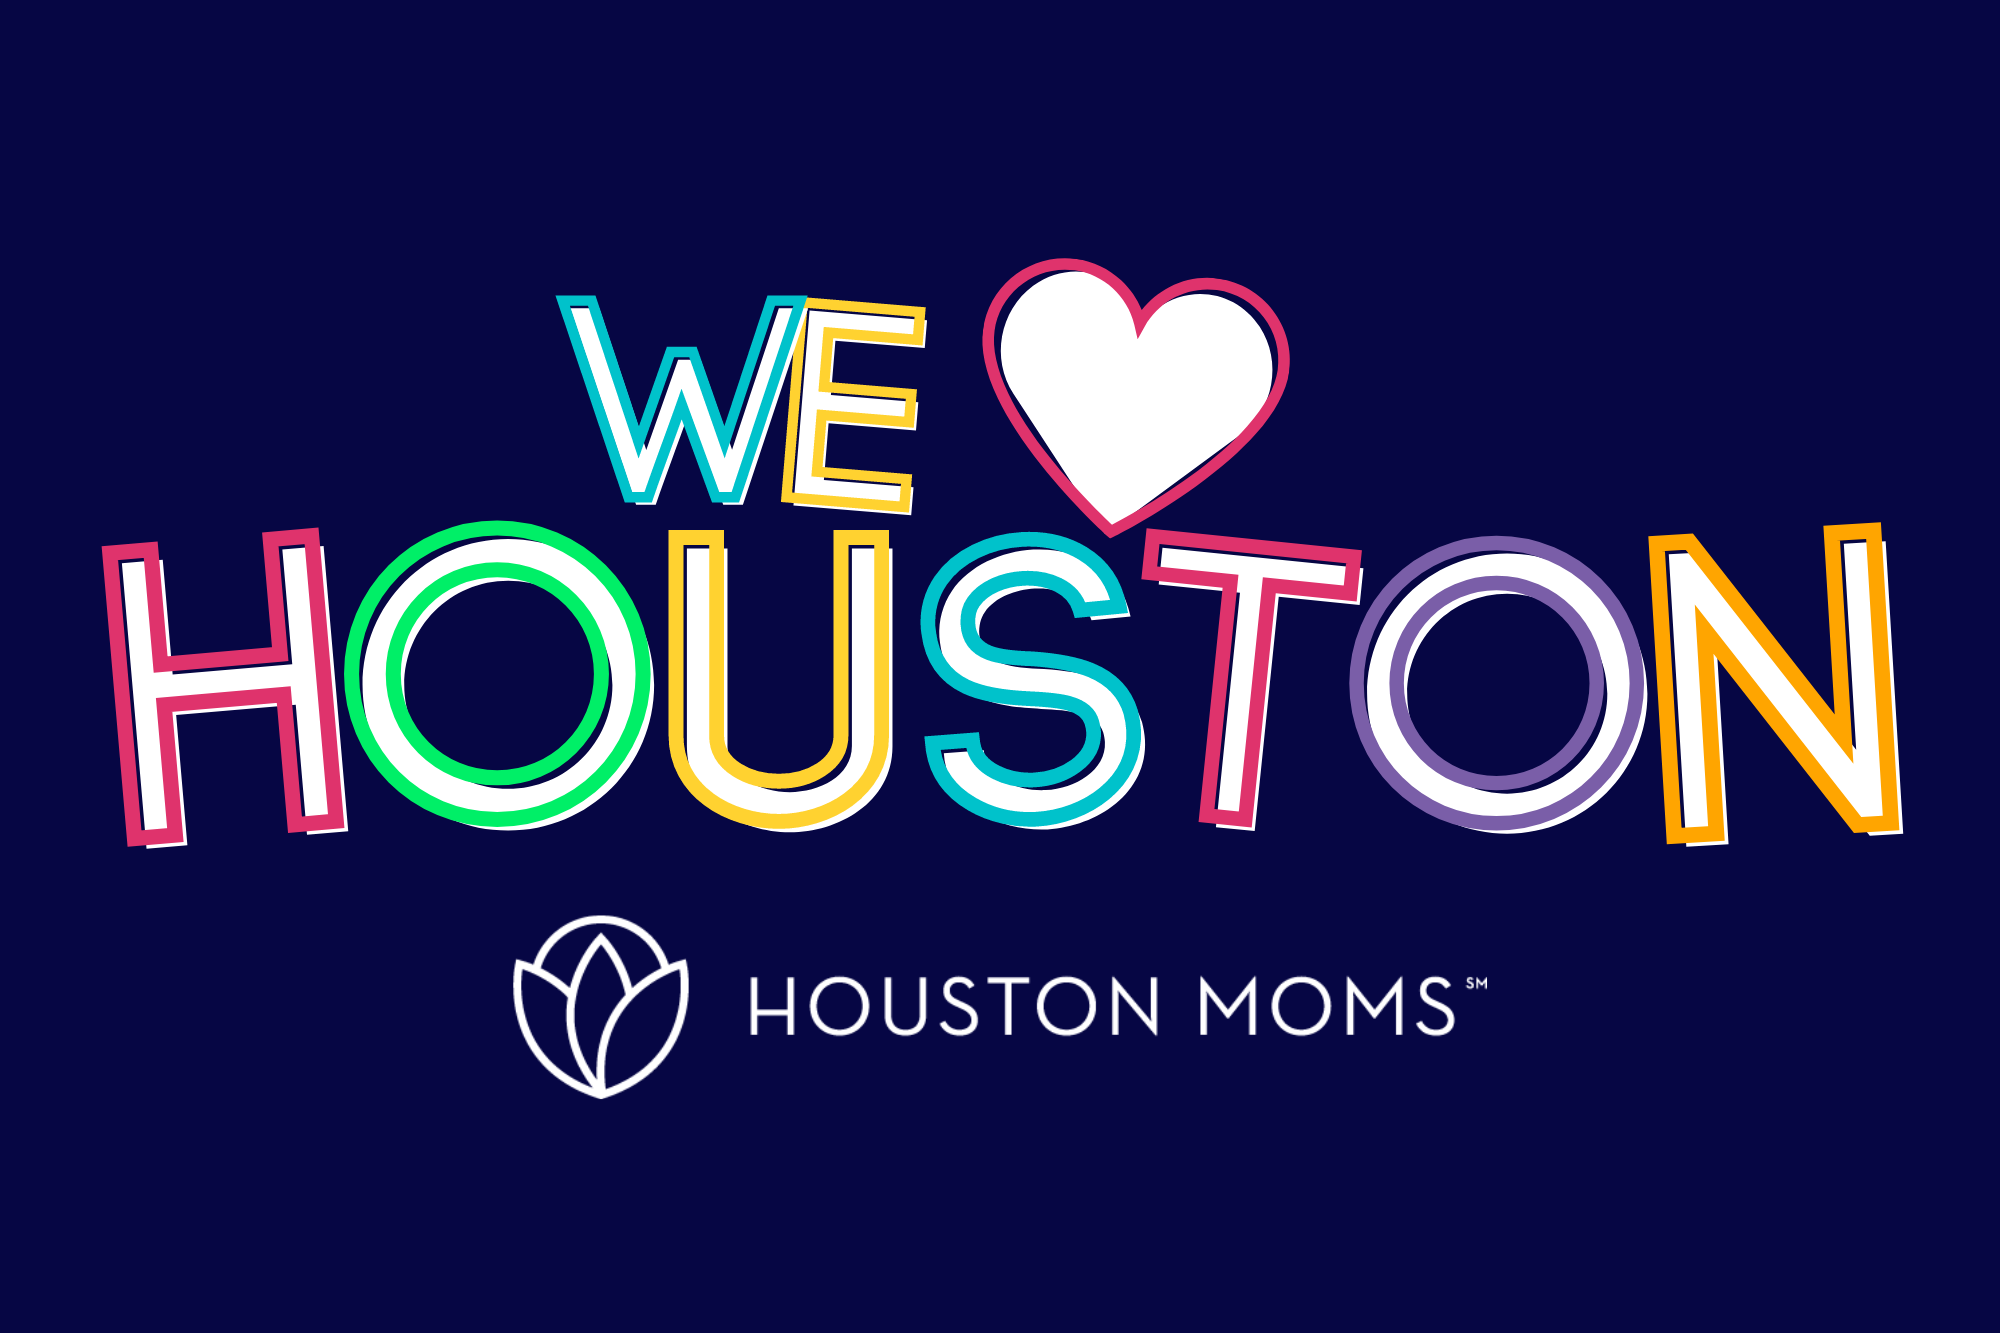 We love Houston image